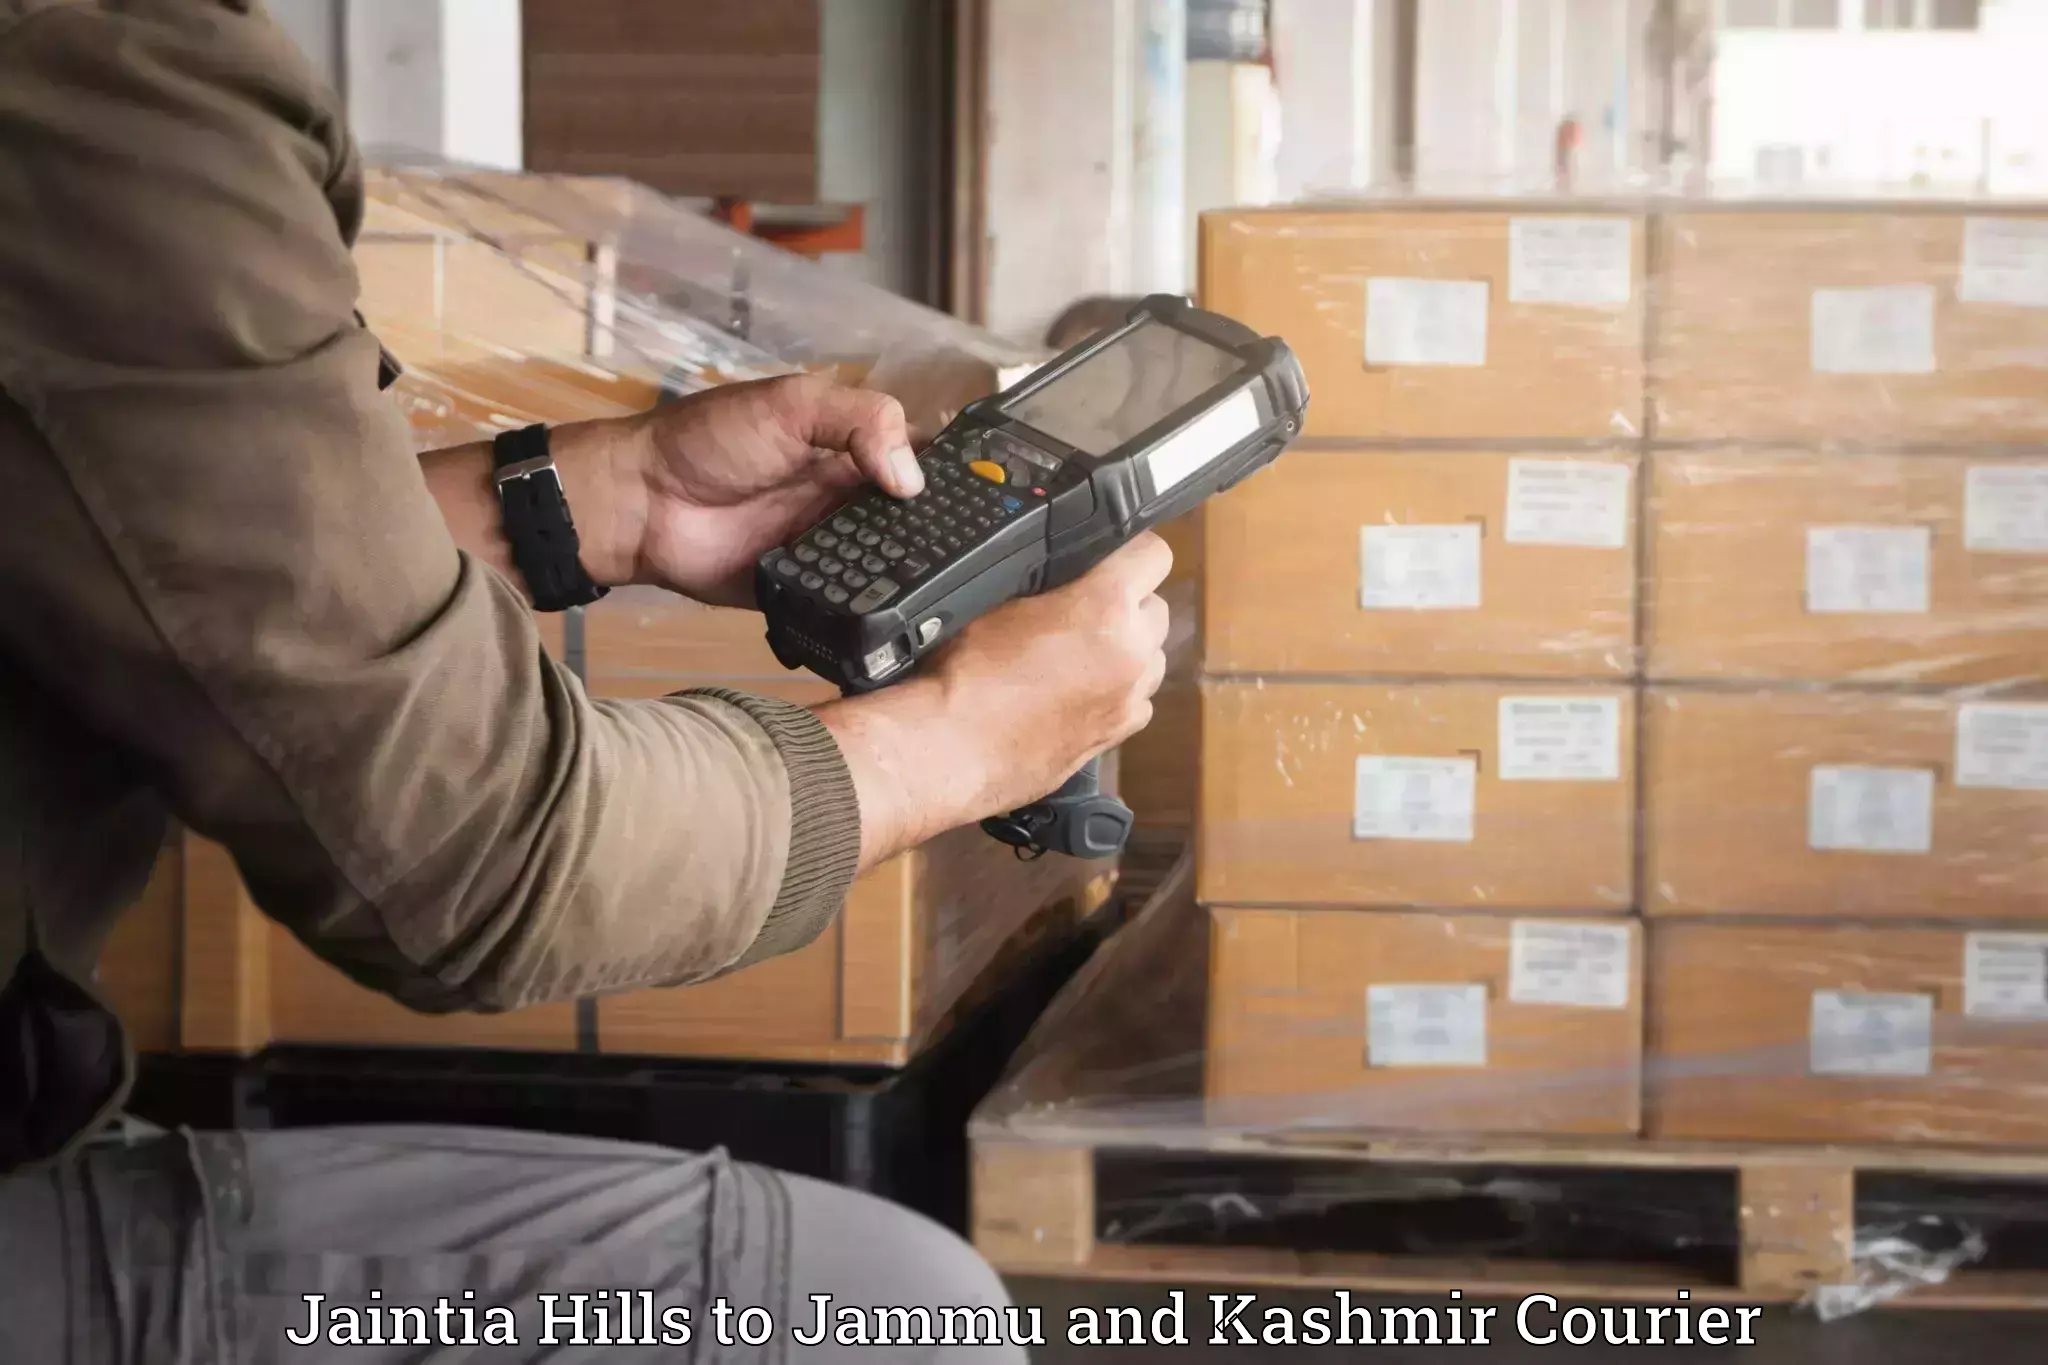 Personalized relocation plans Jaintia Hills to Srinagar Kashmir